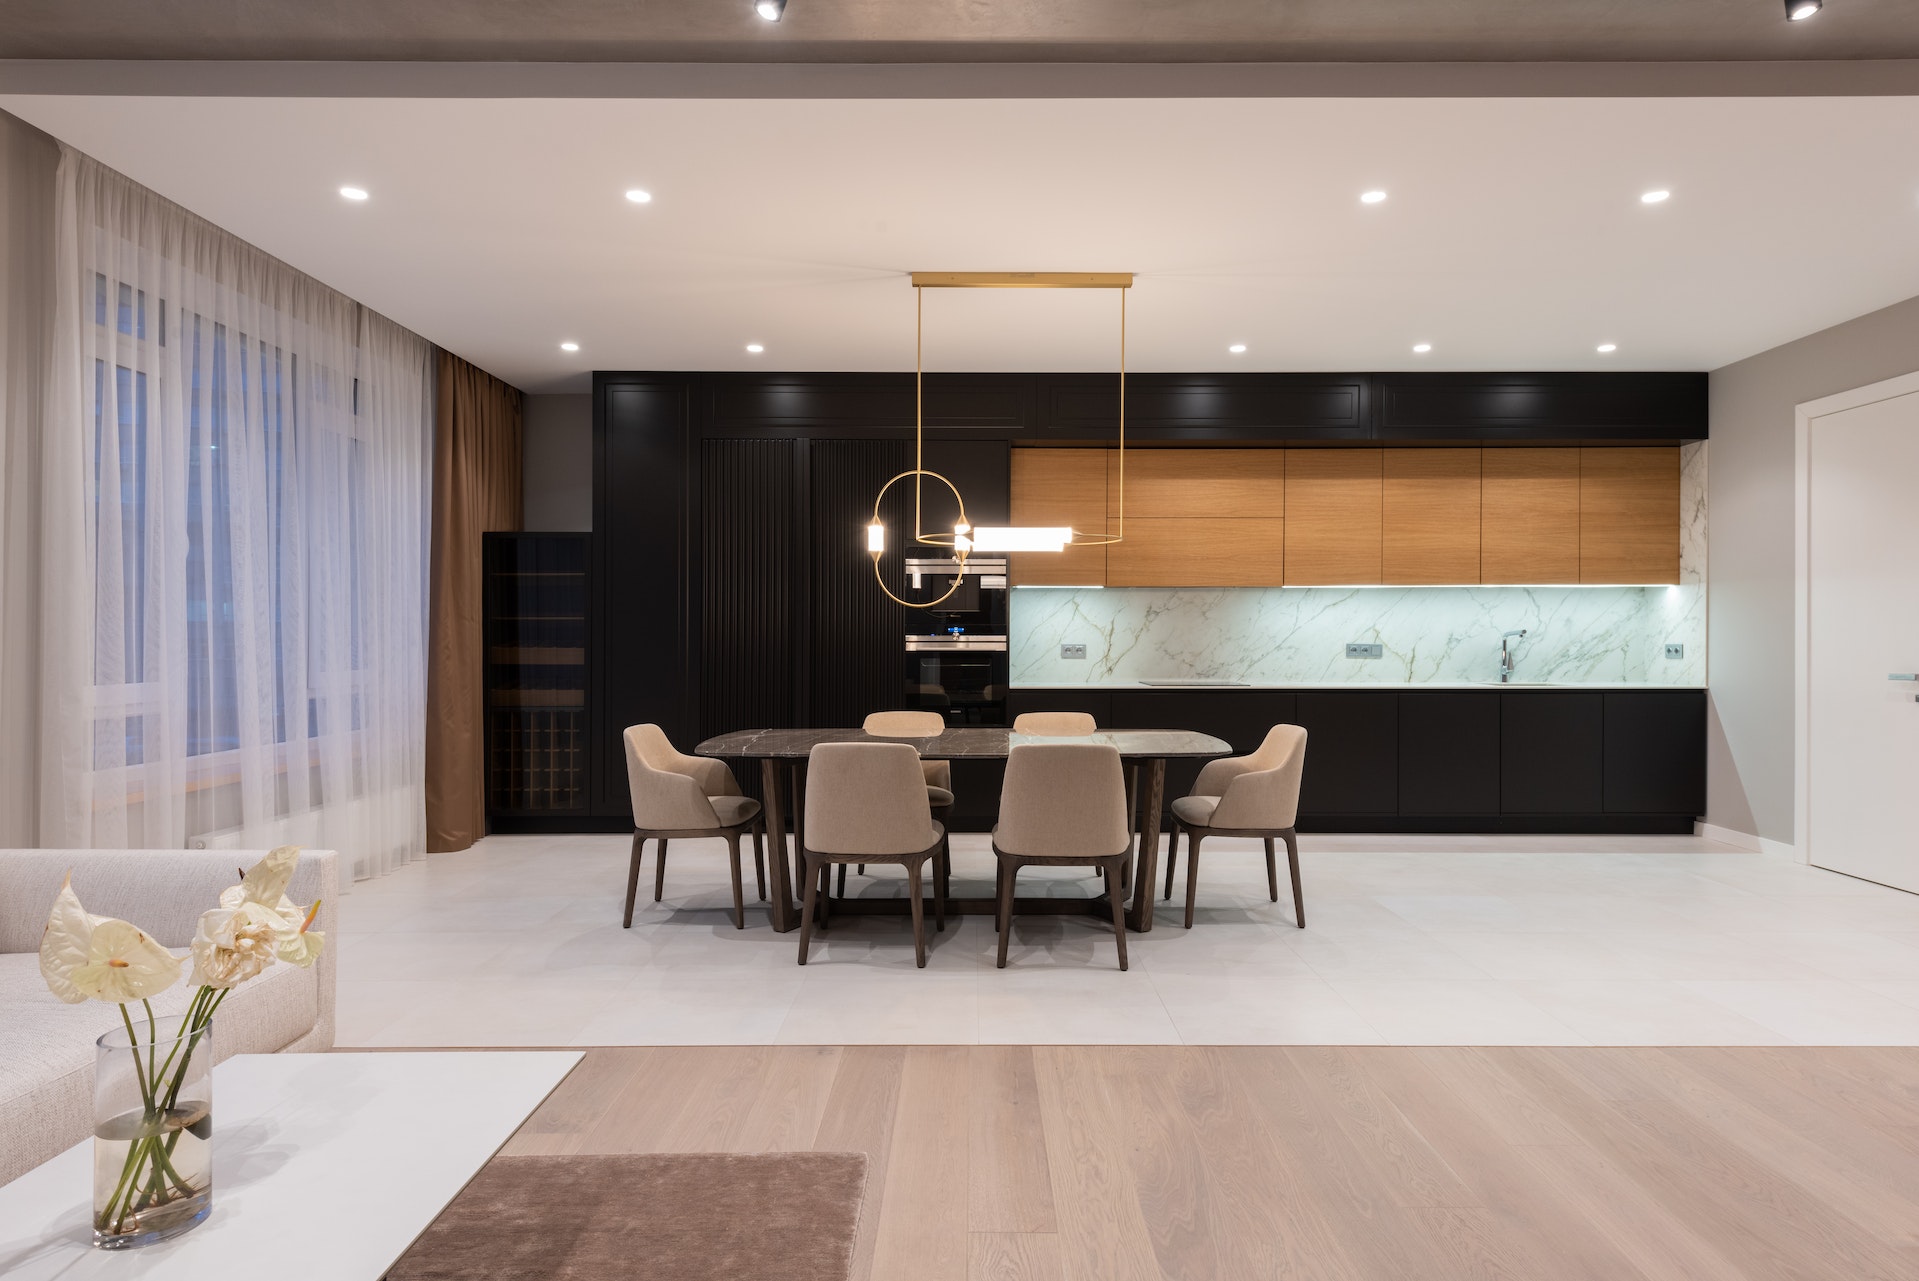 Interior Design for kitchens